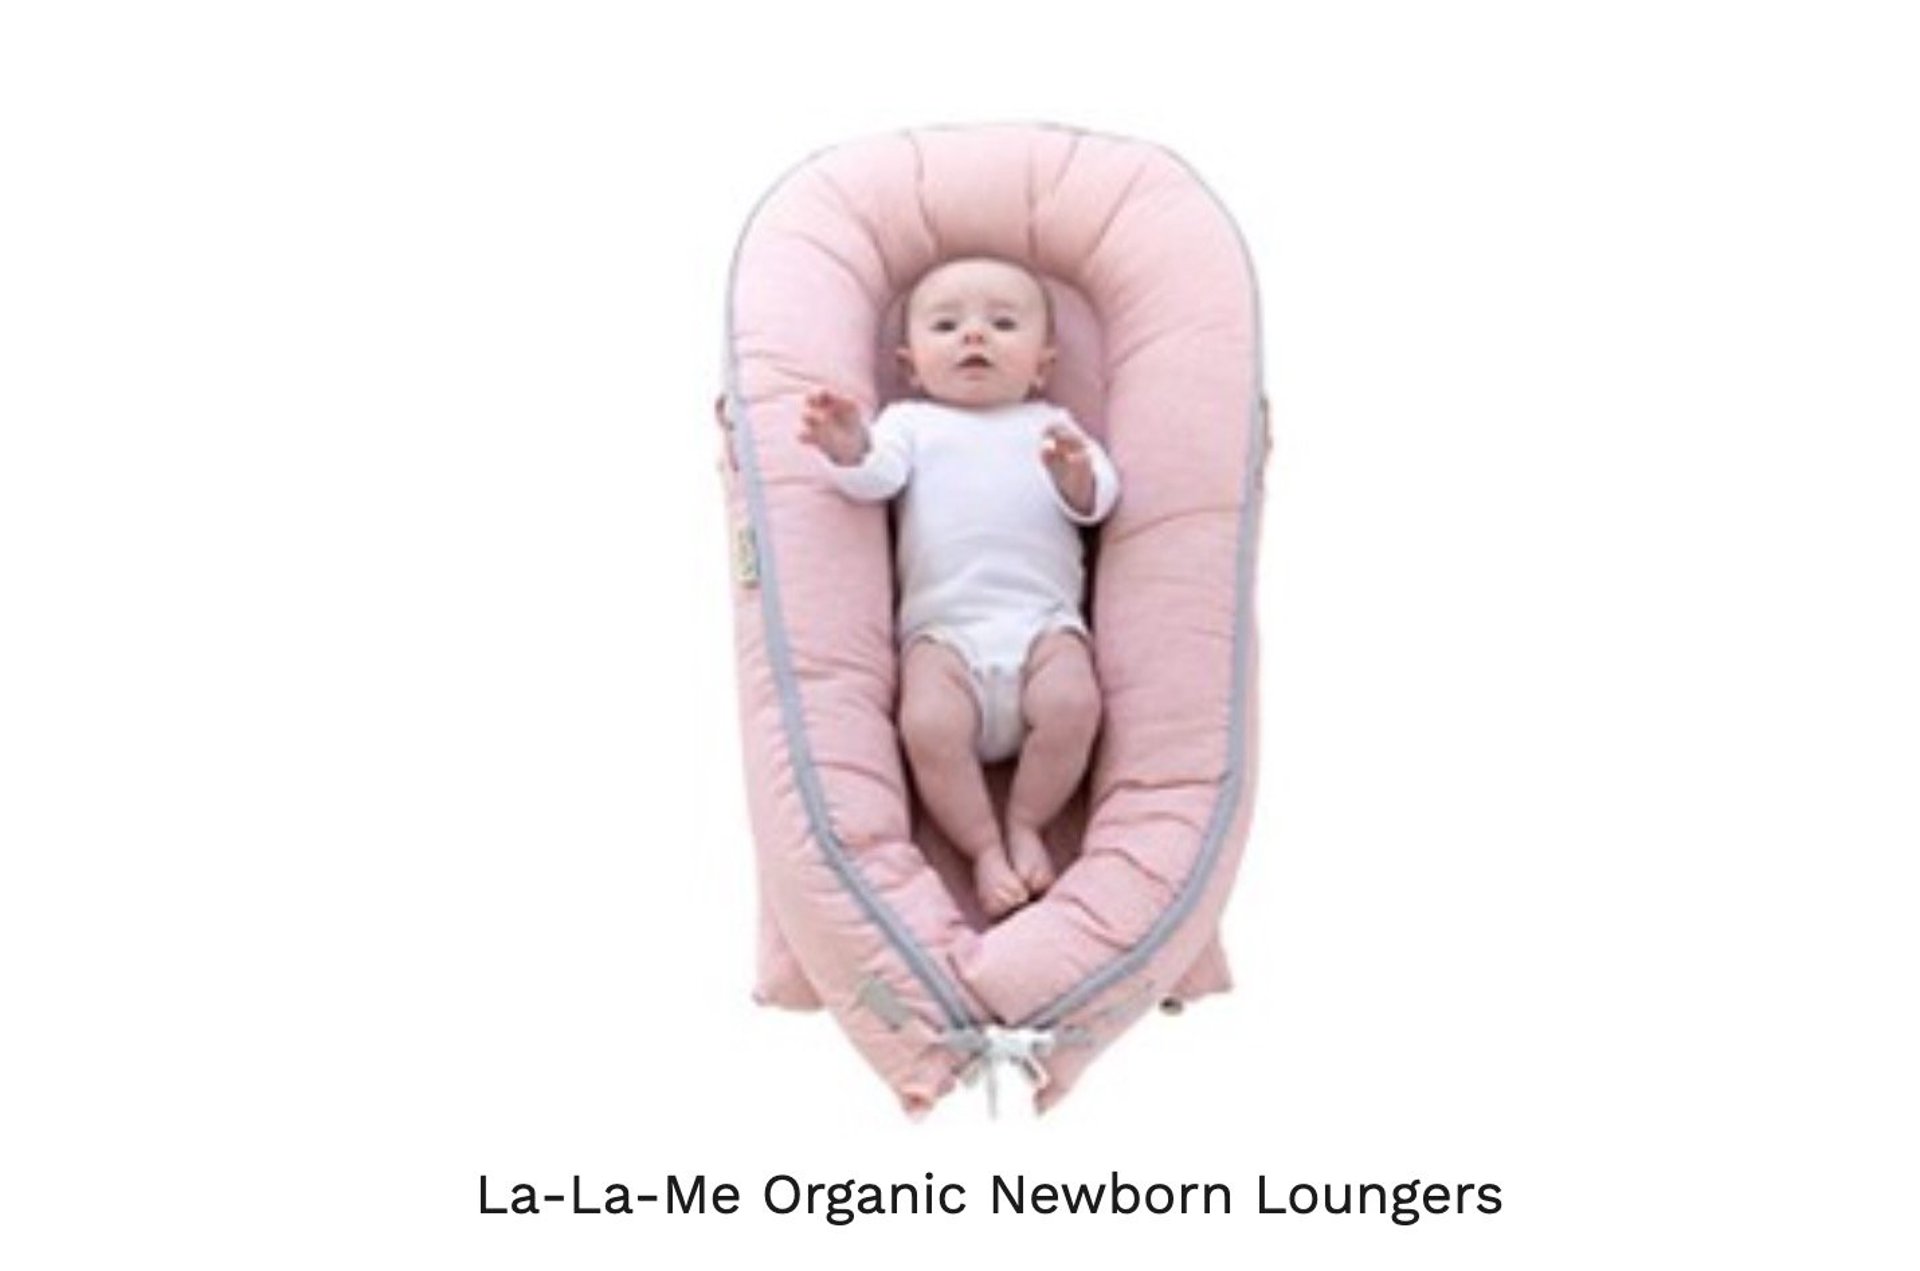 News Picture: Feds Warn Parents: Don't Use La-La-Me Infant Loungers Due to Suffocation Risk